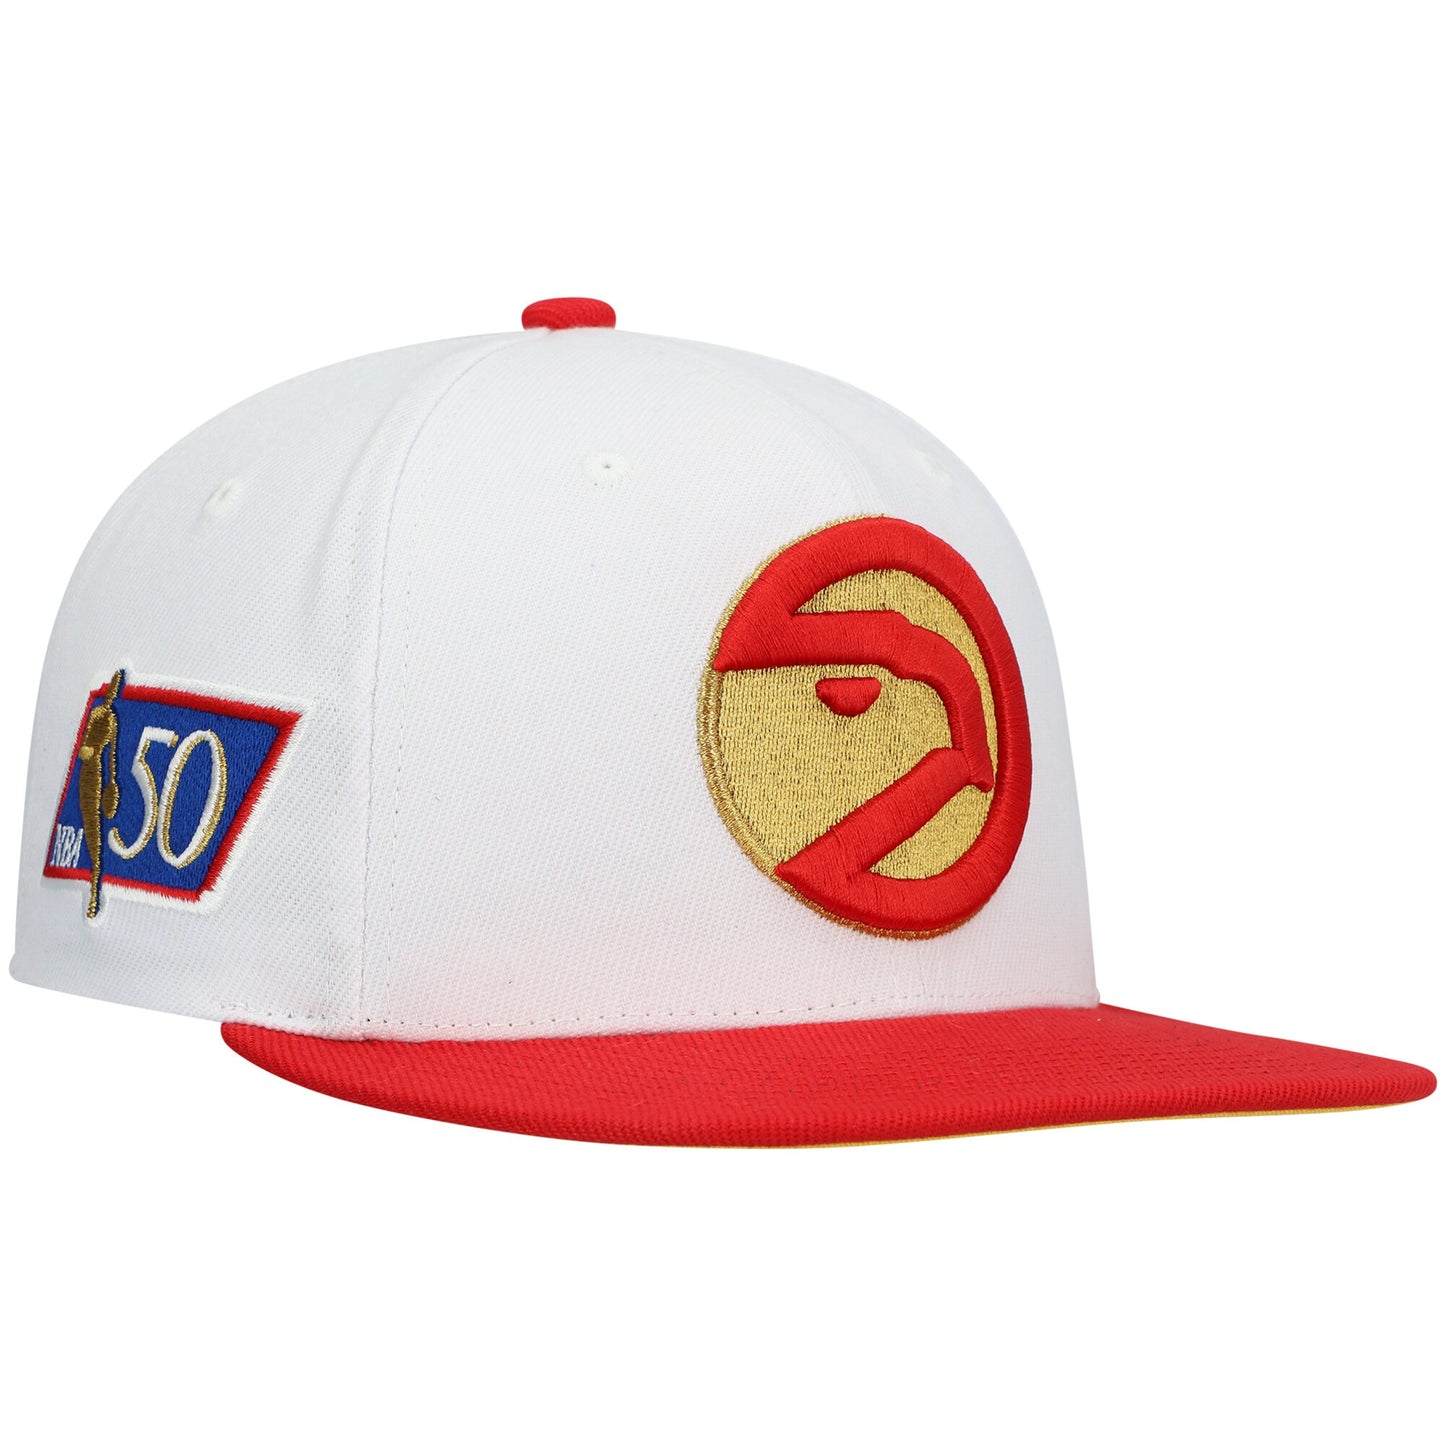 Atlanta Hawks Mitchell & Ness Hardwood Classics 50th Anniversary Snapback Hat - White/Red